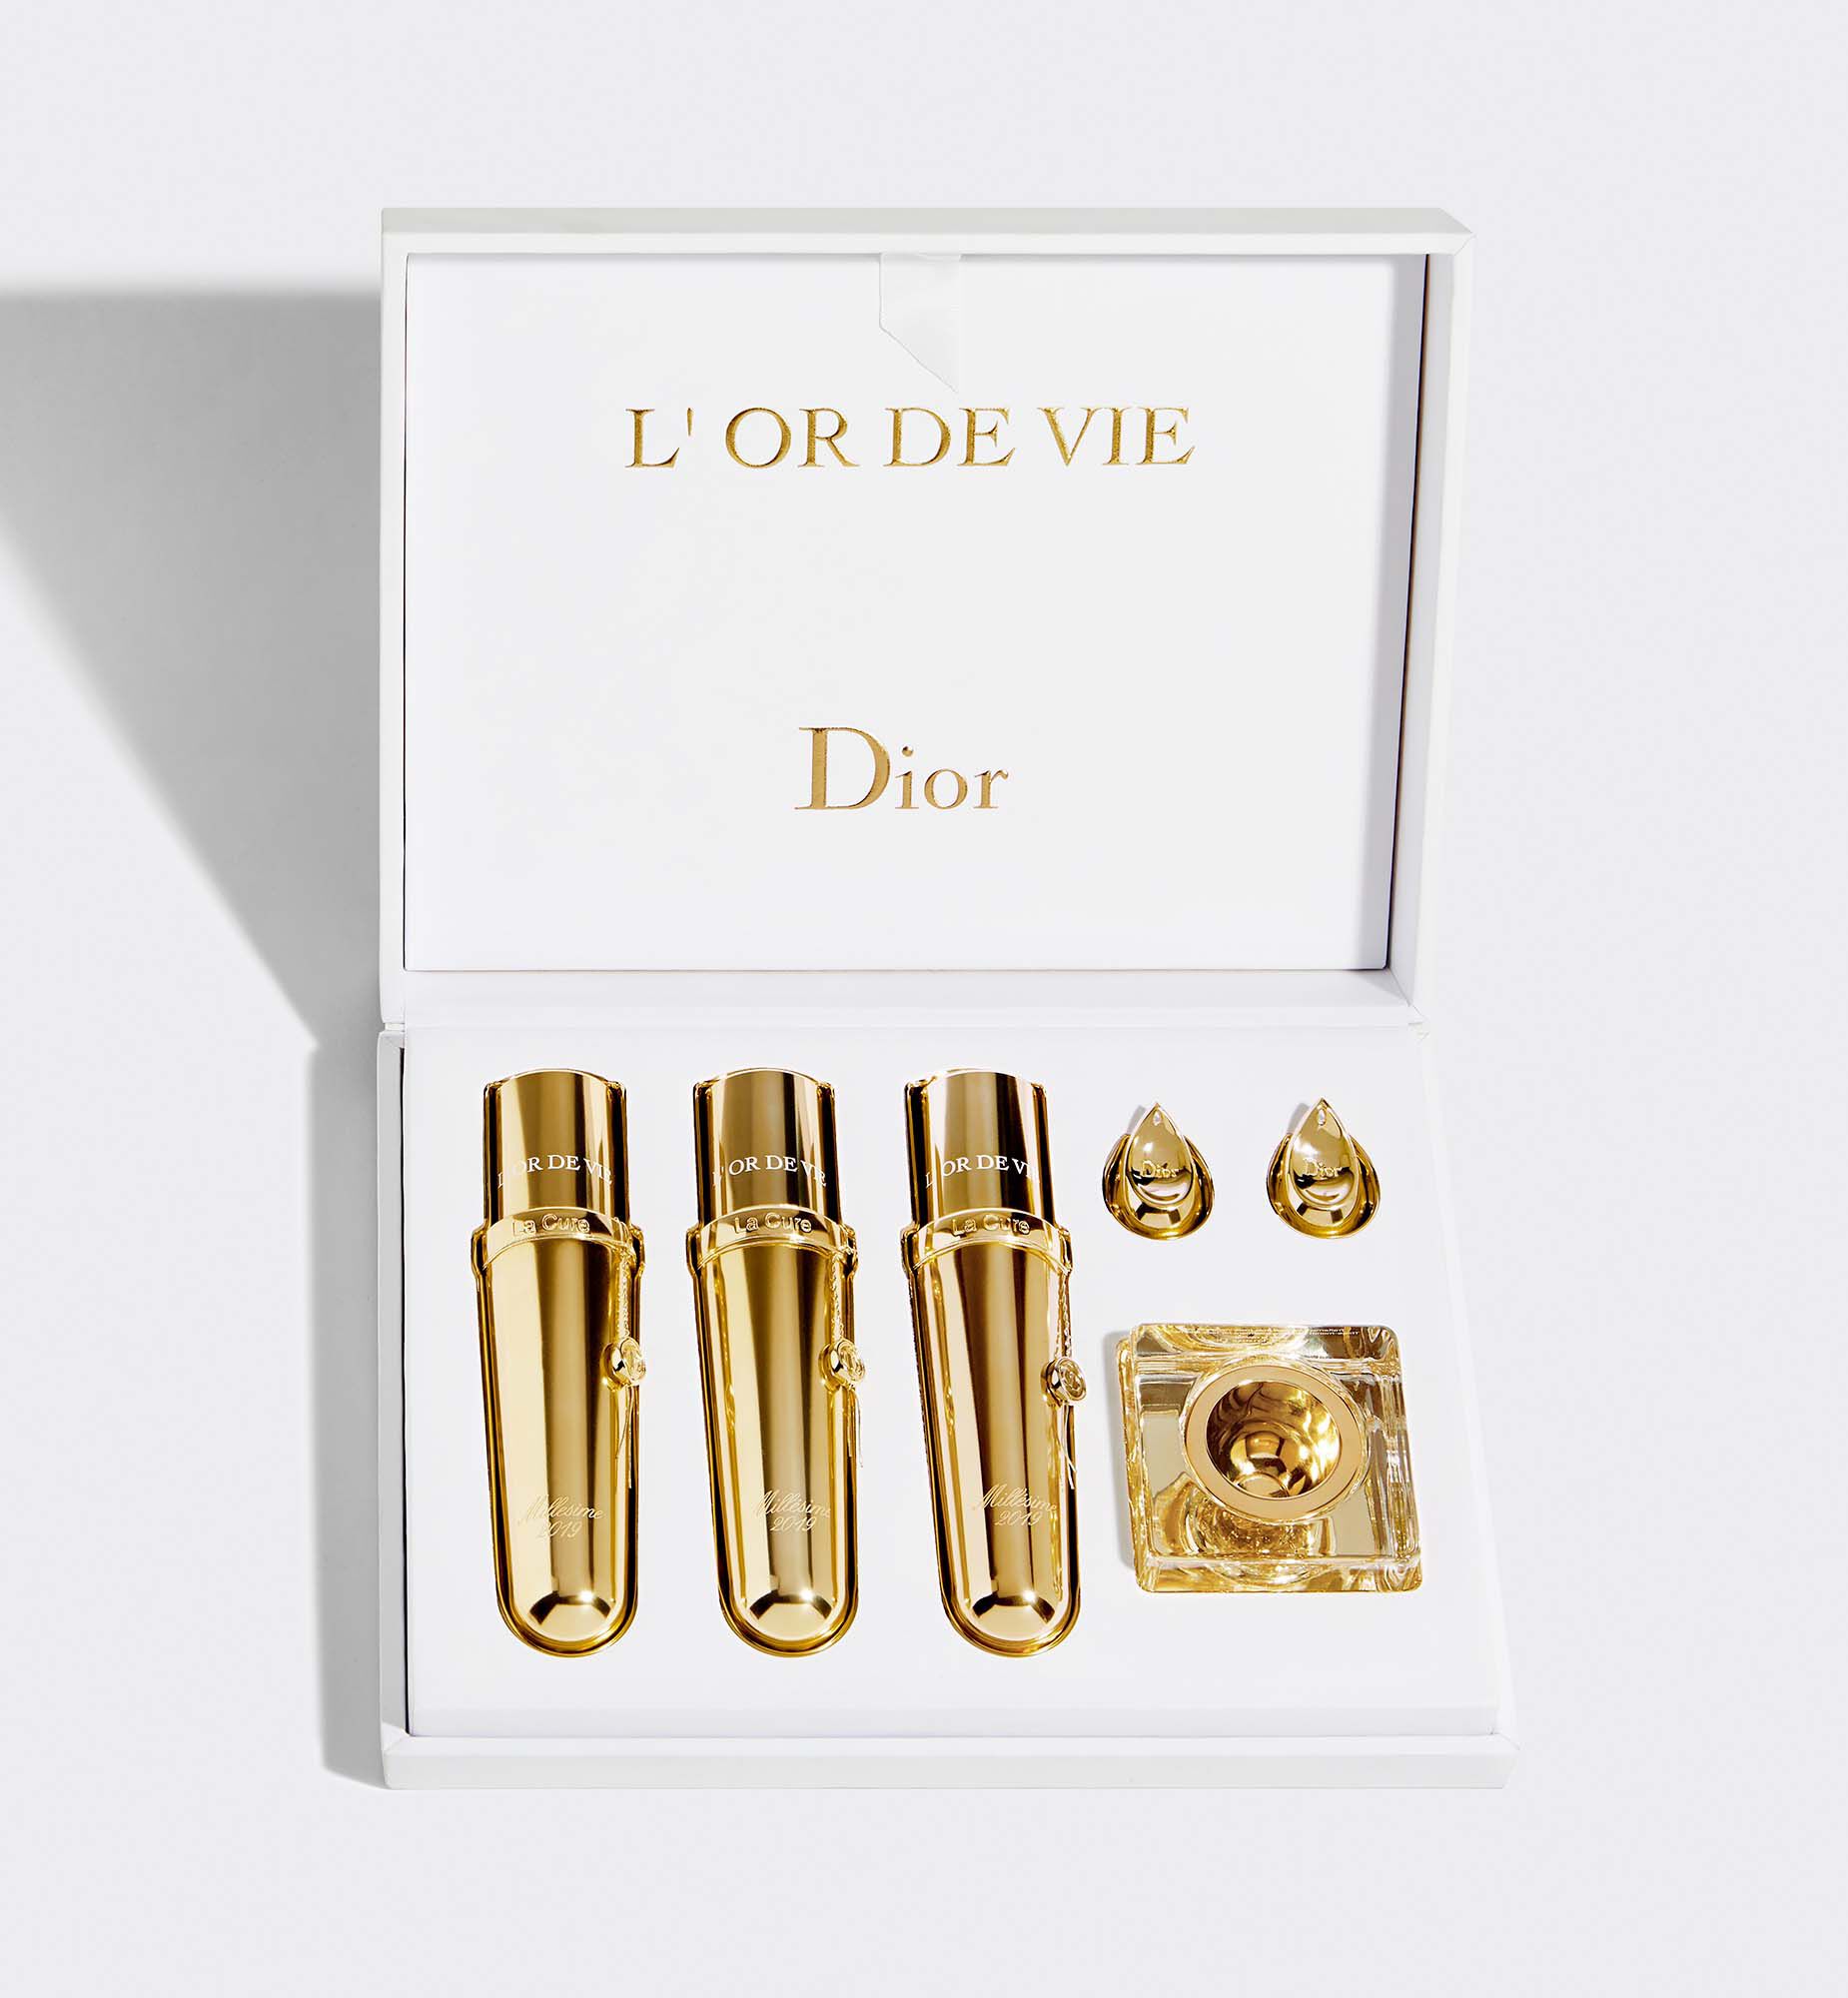 Christian Dior La Cure 美容液 オードヴィラキュール www.capex.com.ph